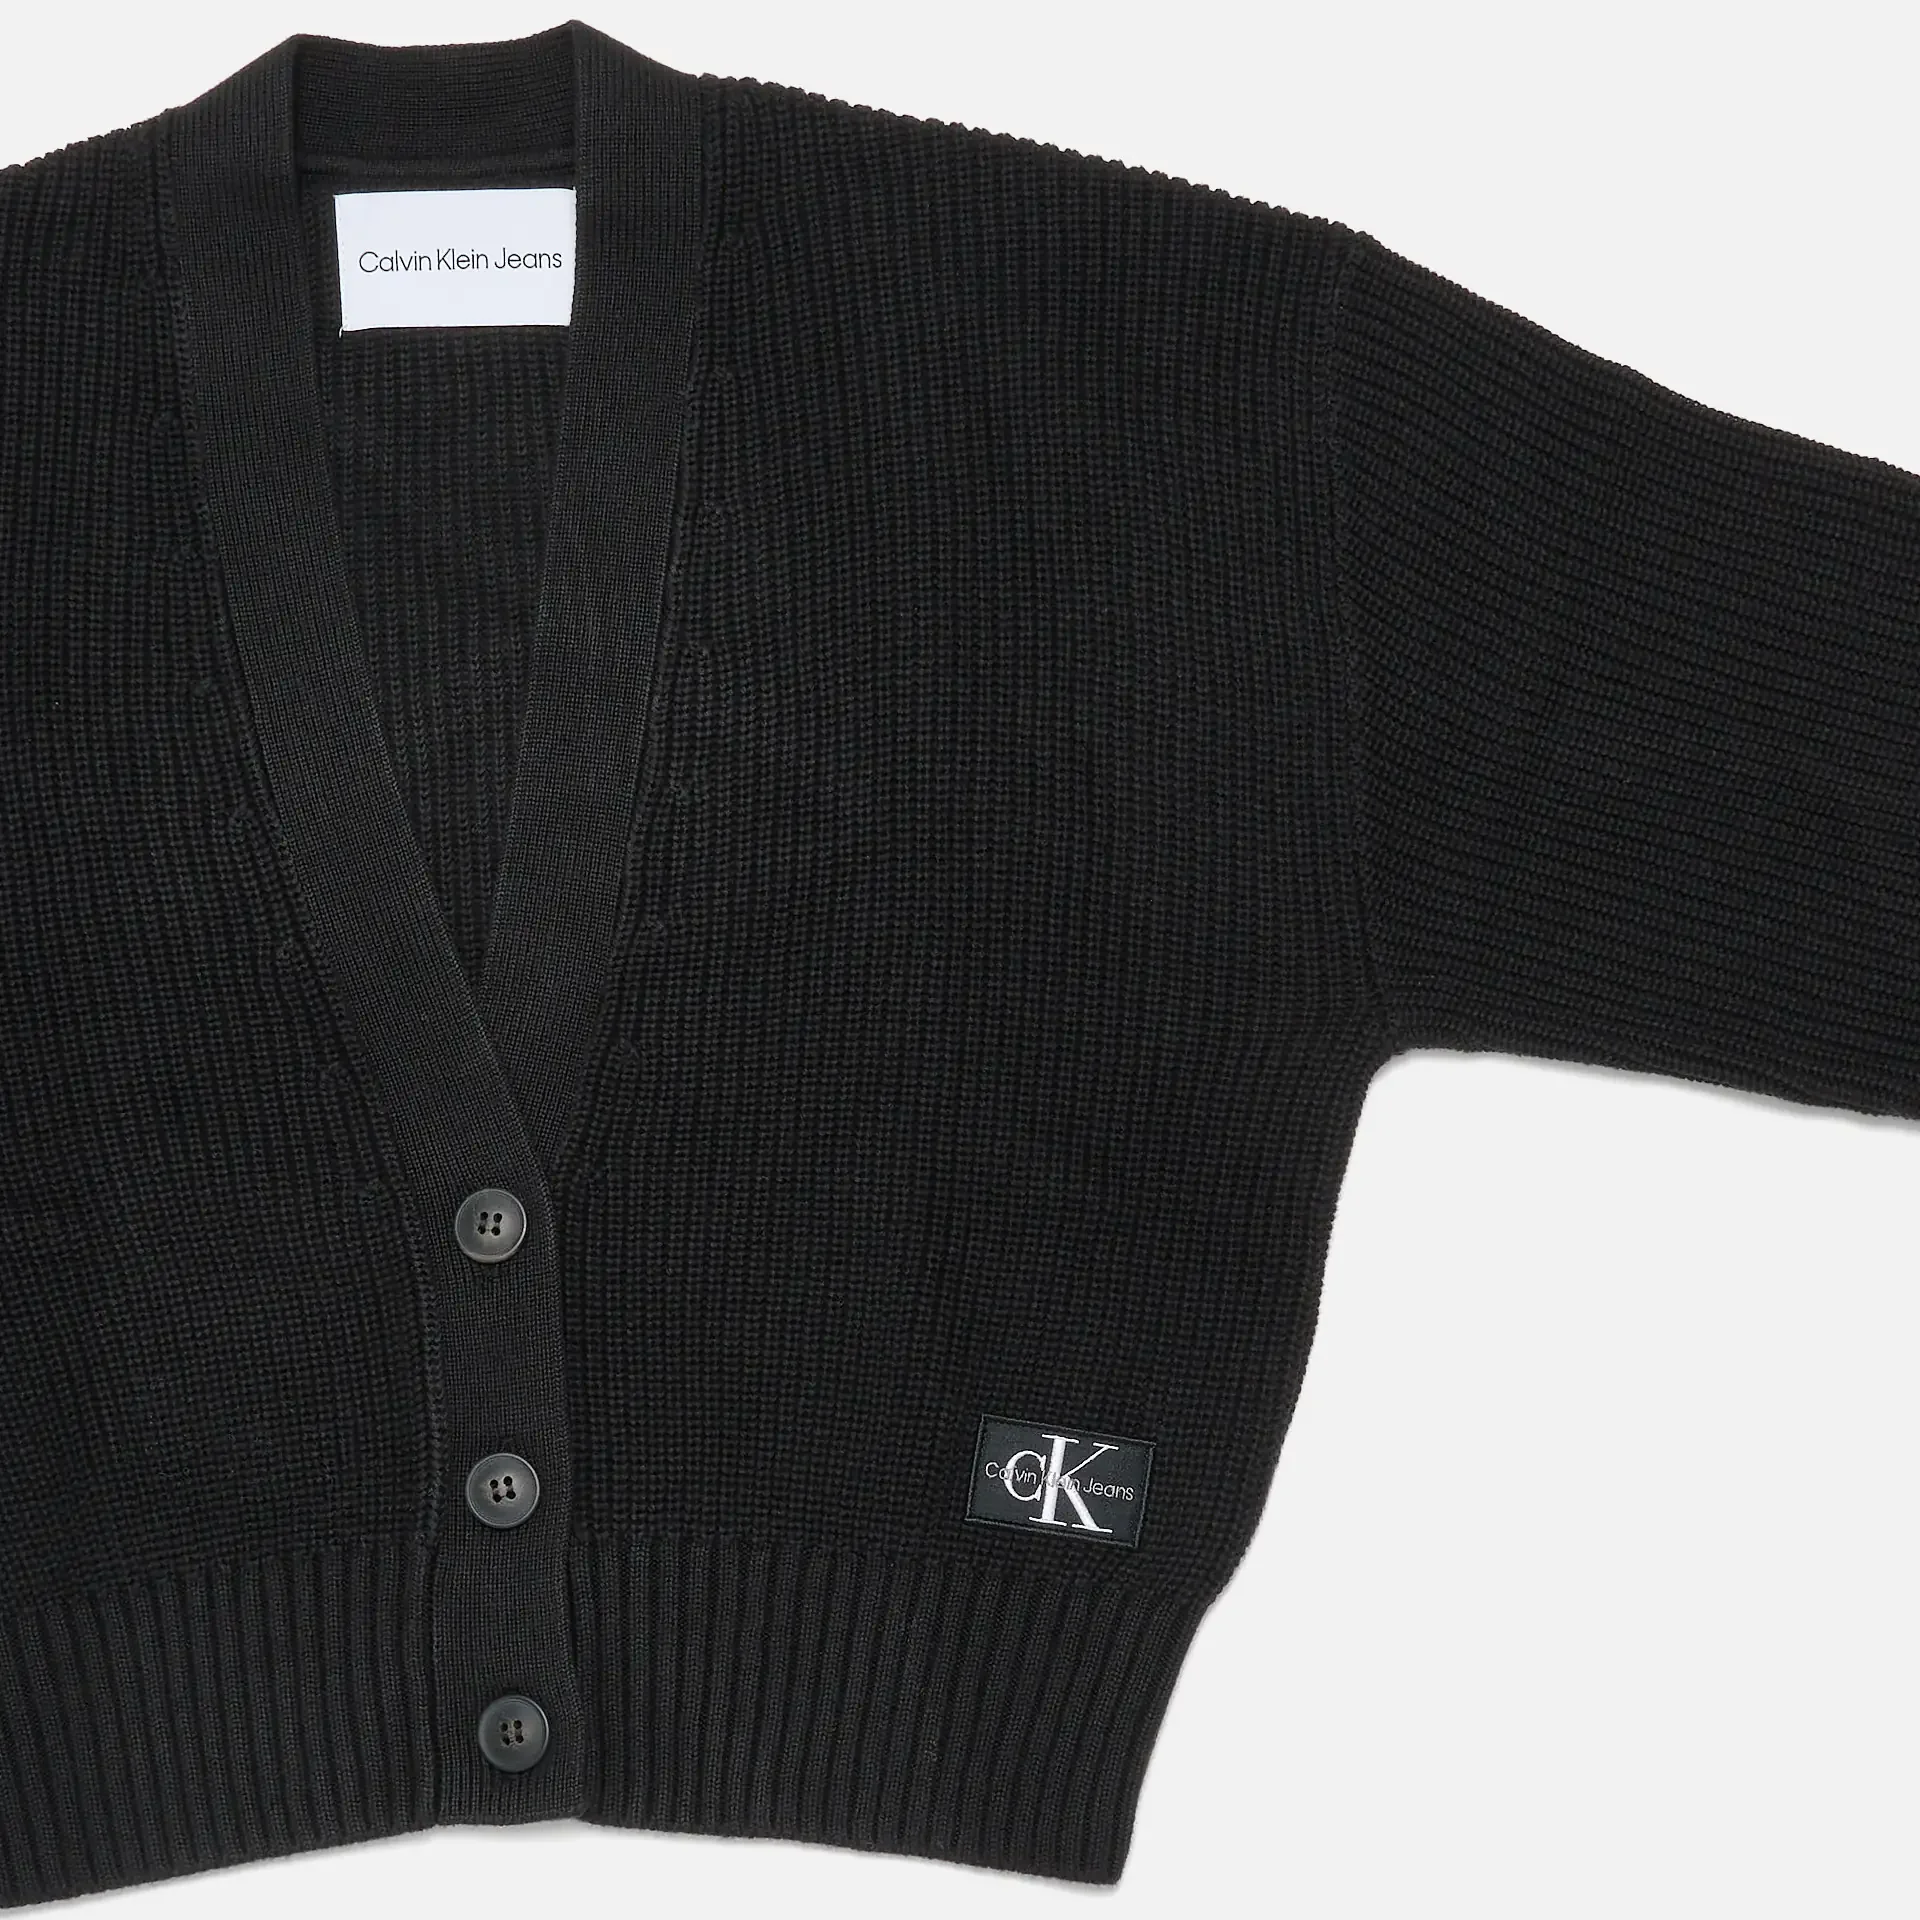 Calvin Klein Jeans Label Chunky Sweater Cardigan Black